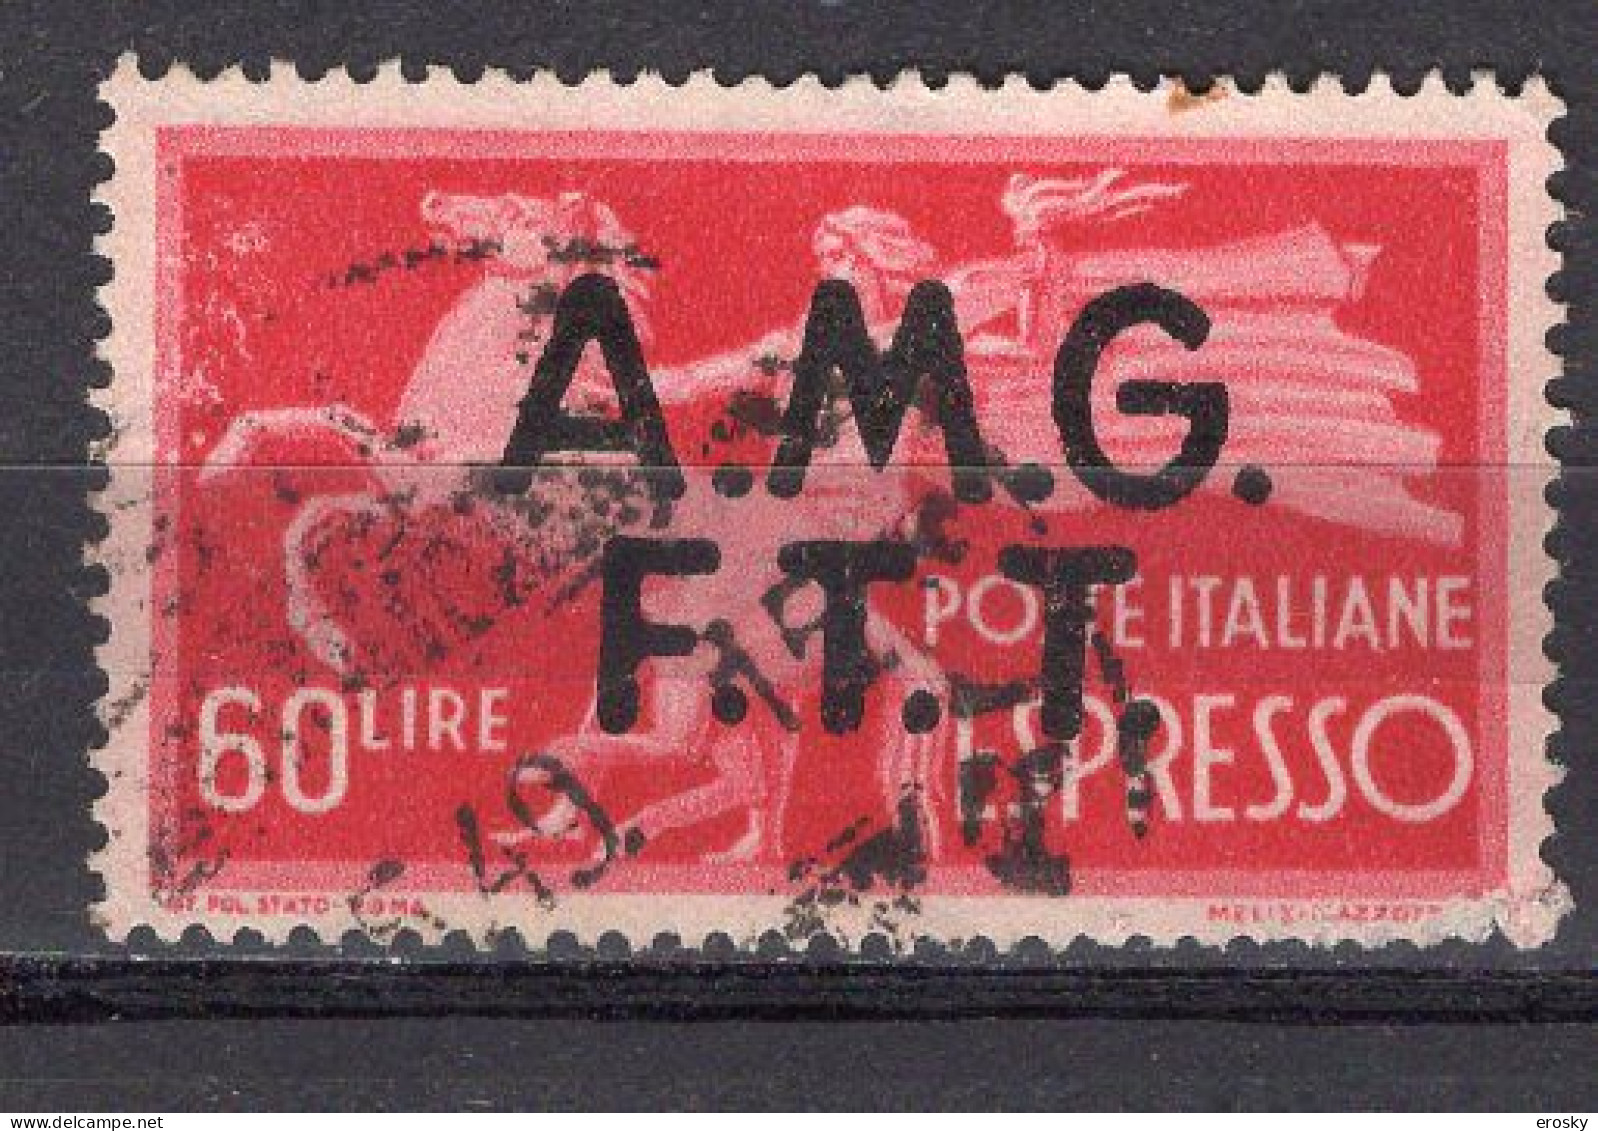 Z6884 - TRIESTE AMG-FTT ESPRESSO SASSONE N°4 - Express Mail